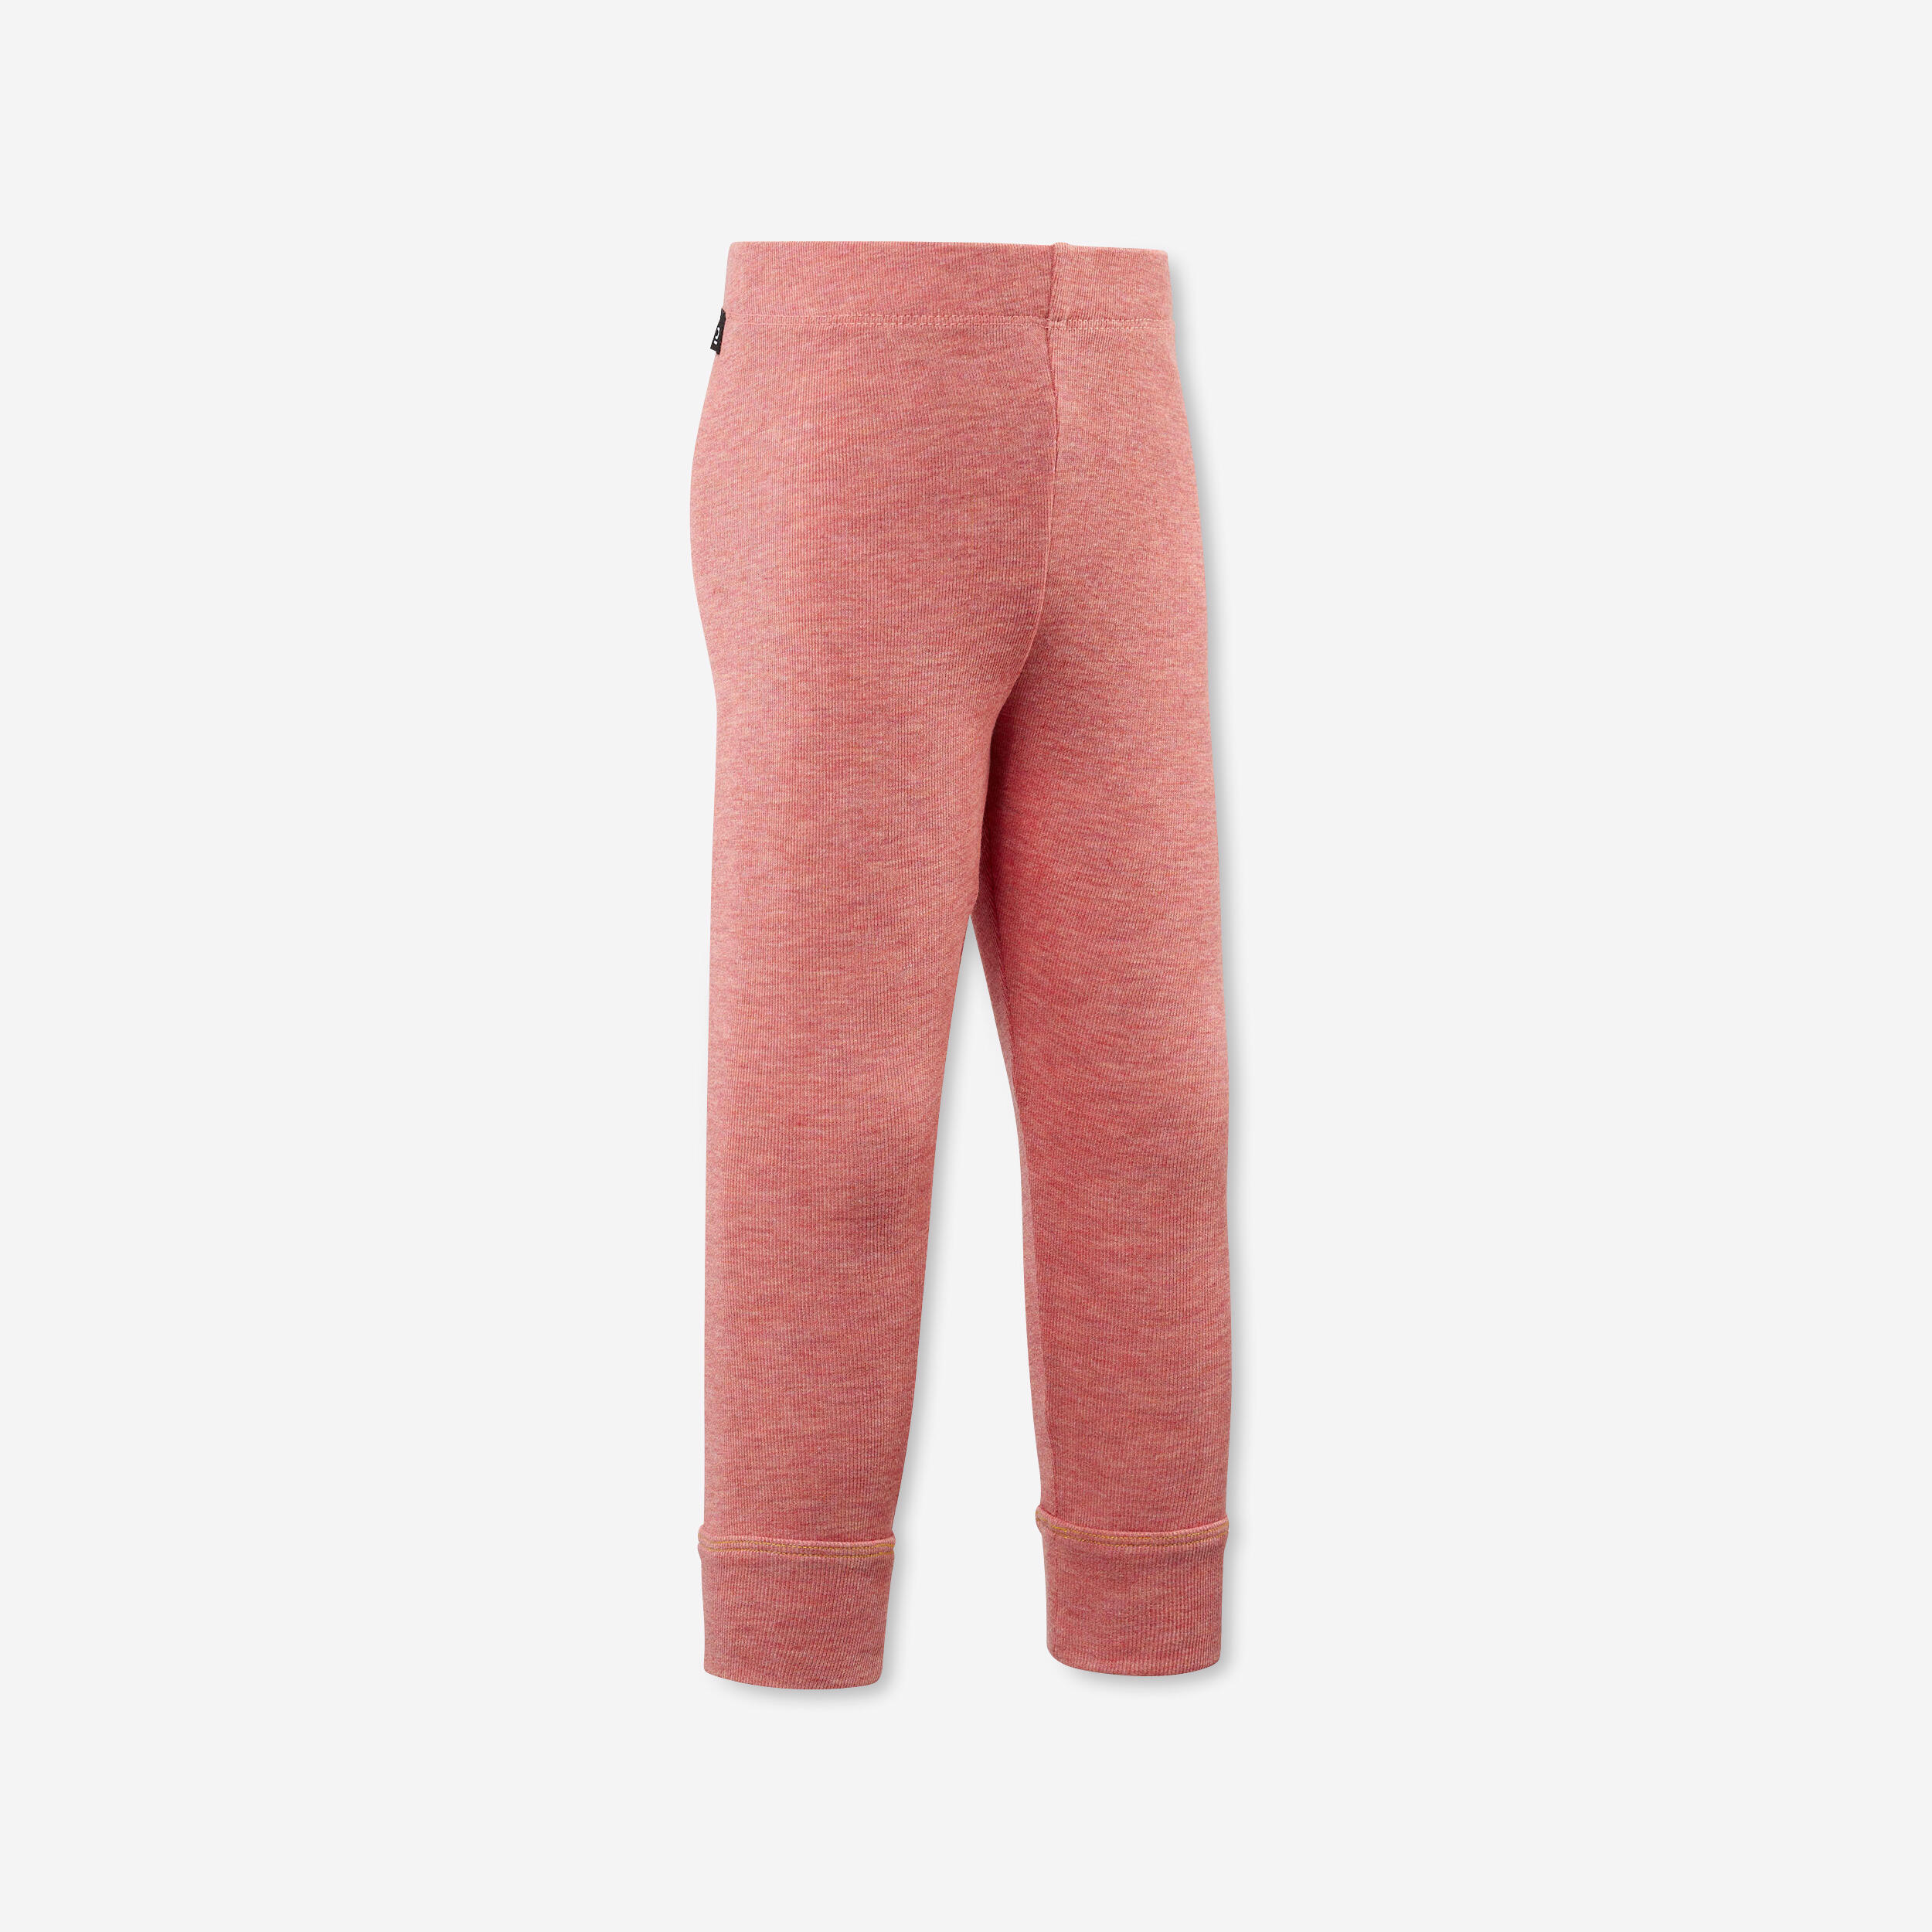 Base layer trousers, Baby ski leggings - WARM pink 1/7